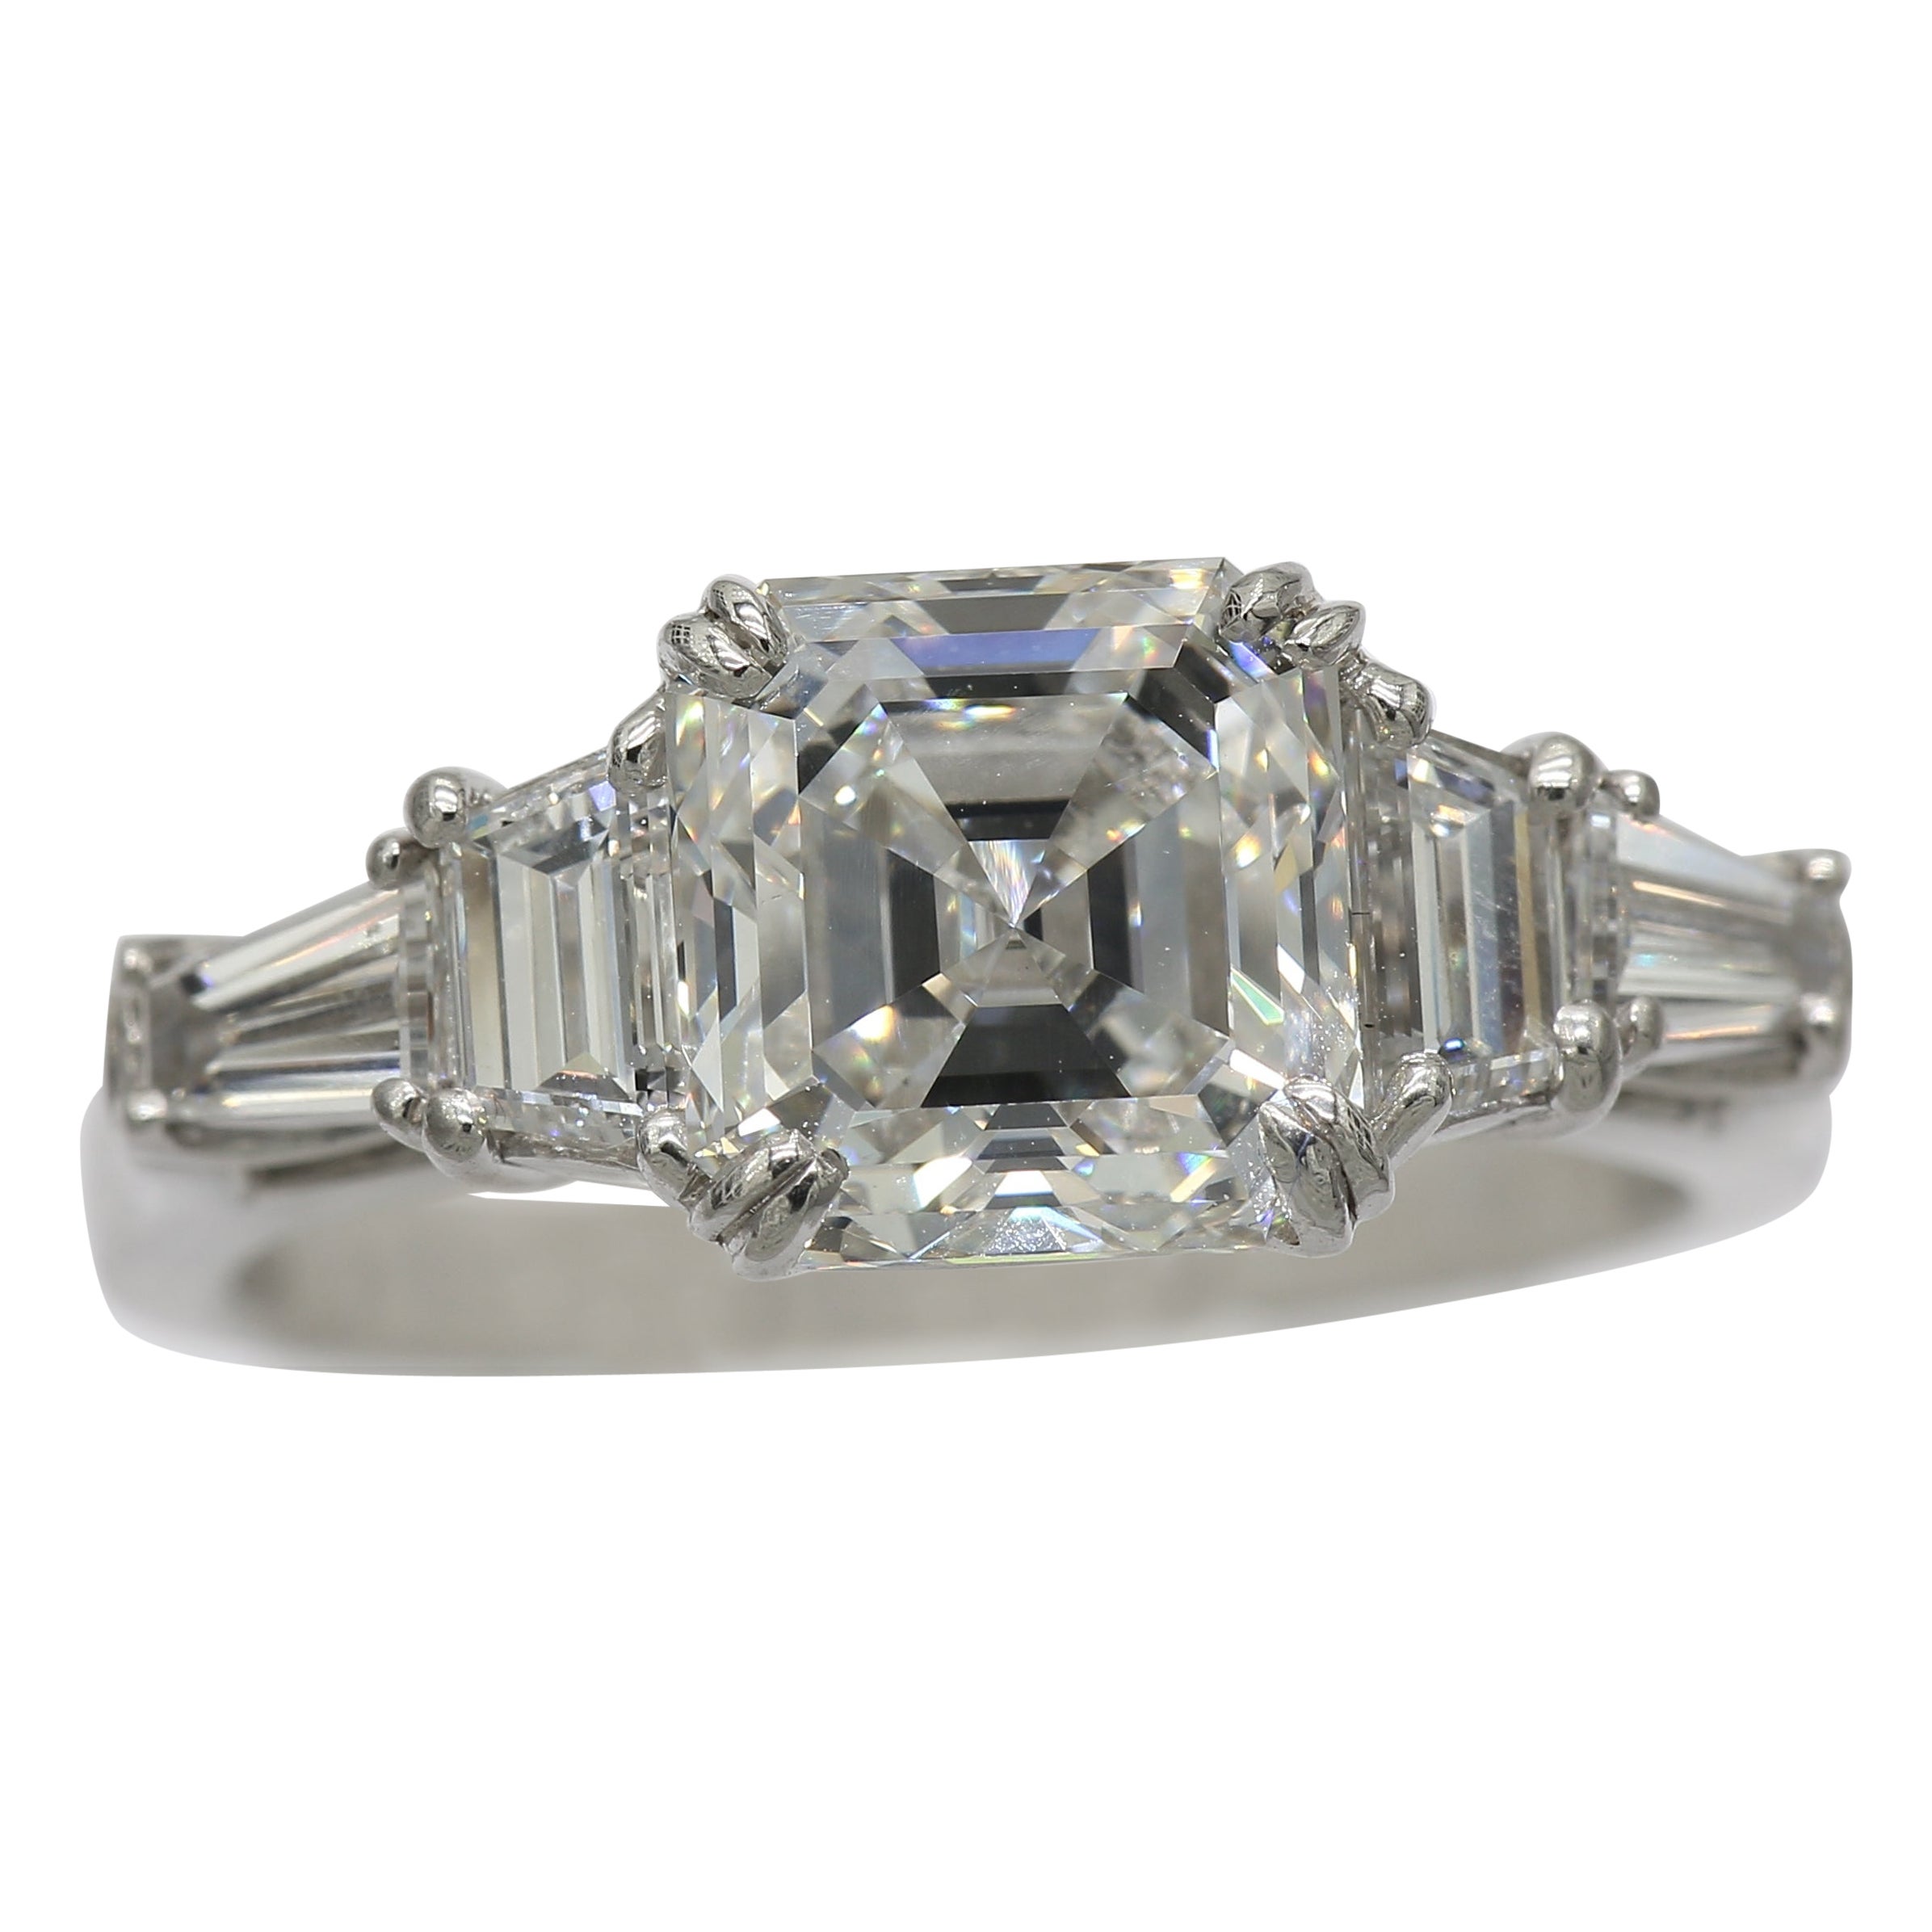 Asscher Diamond Ring 4.26 Carat Total Weight in Platinum 